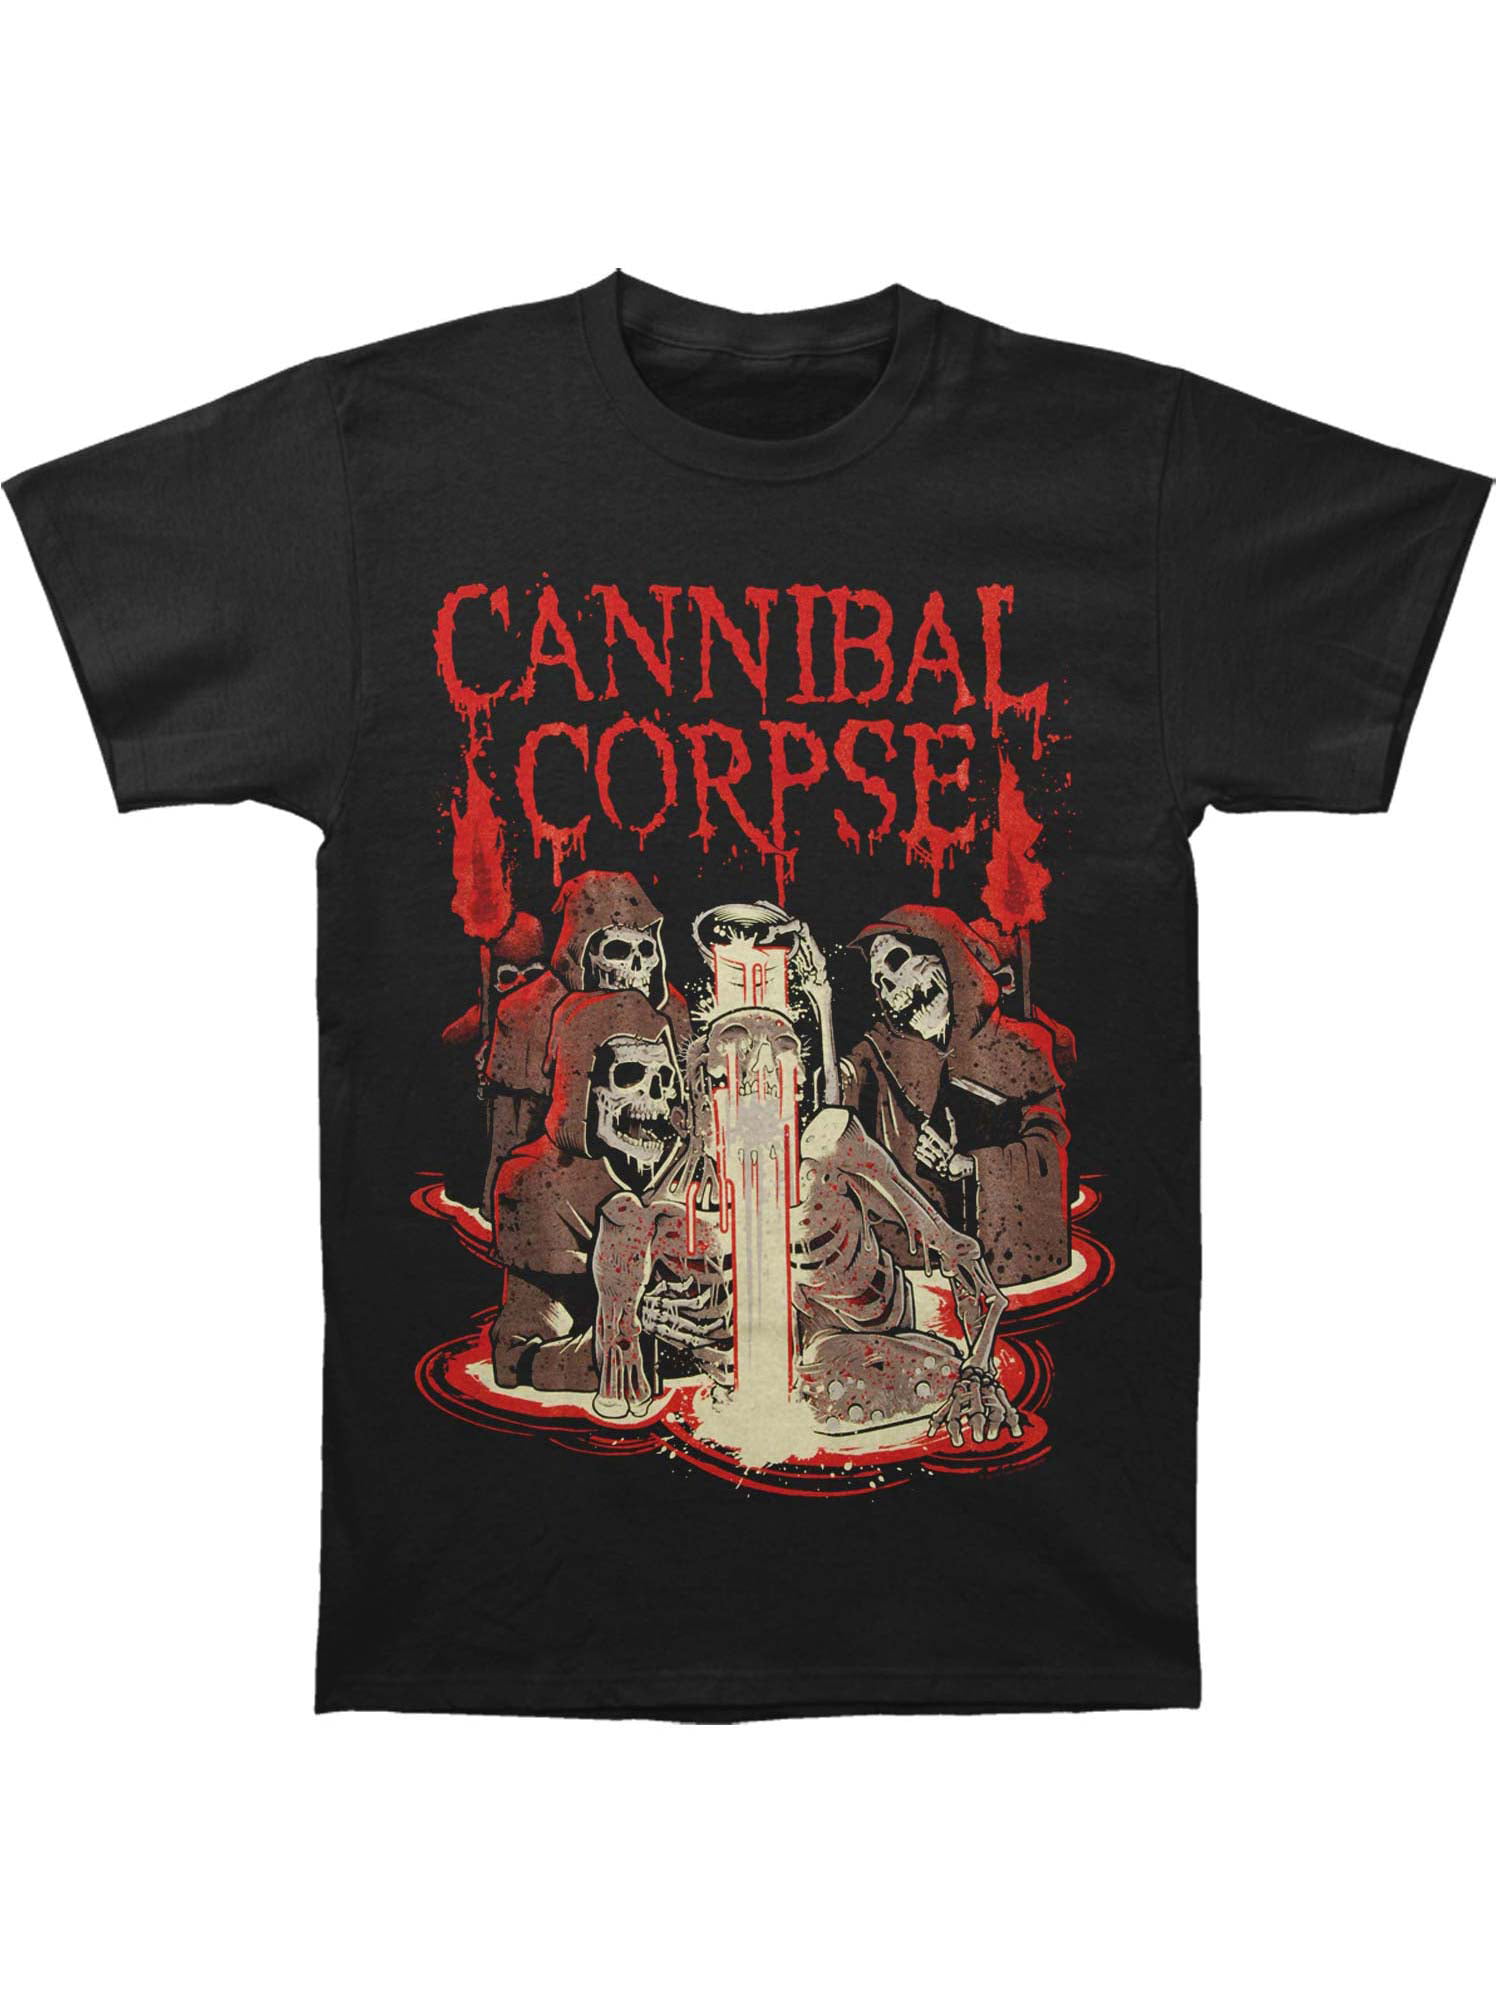 Cannibal Corpse - Cannibal Corpse Men's Acid T-shirt Black - Walmart